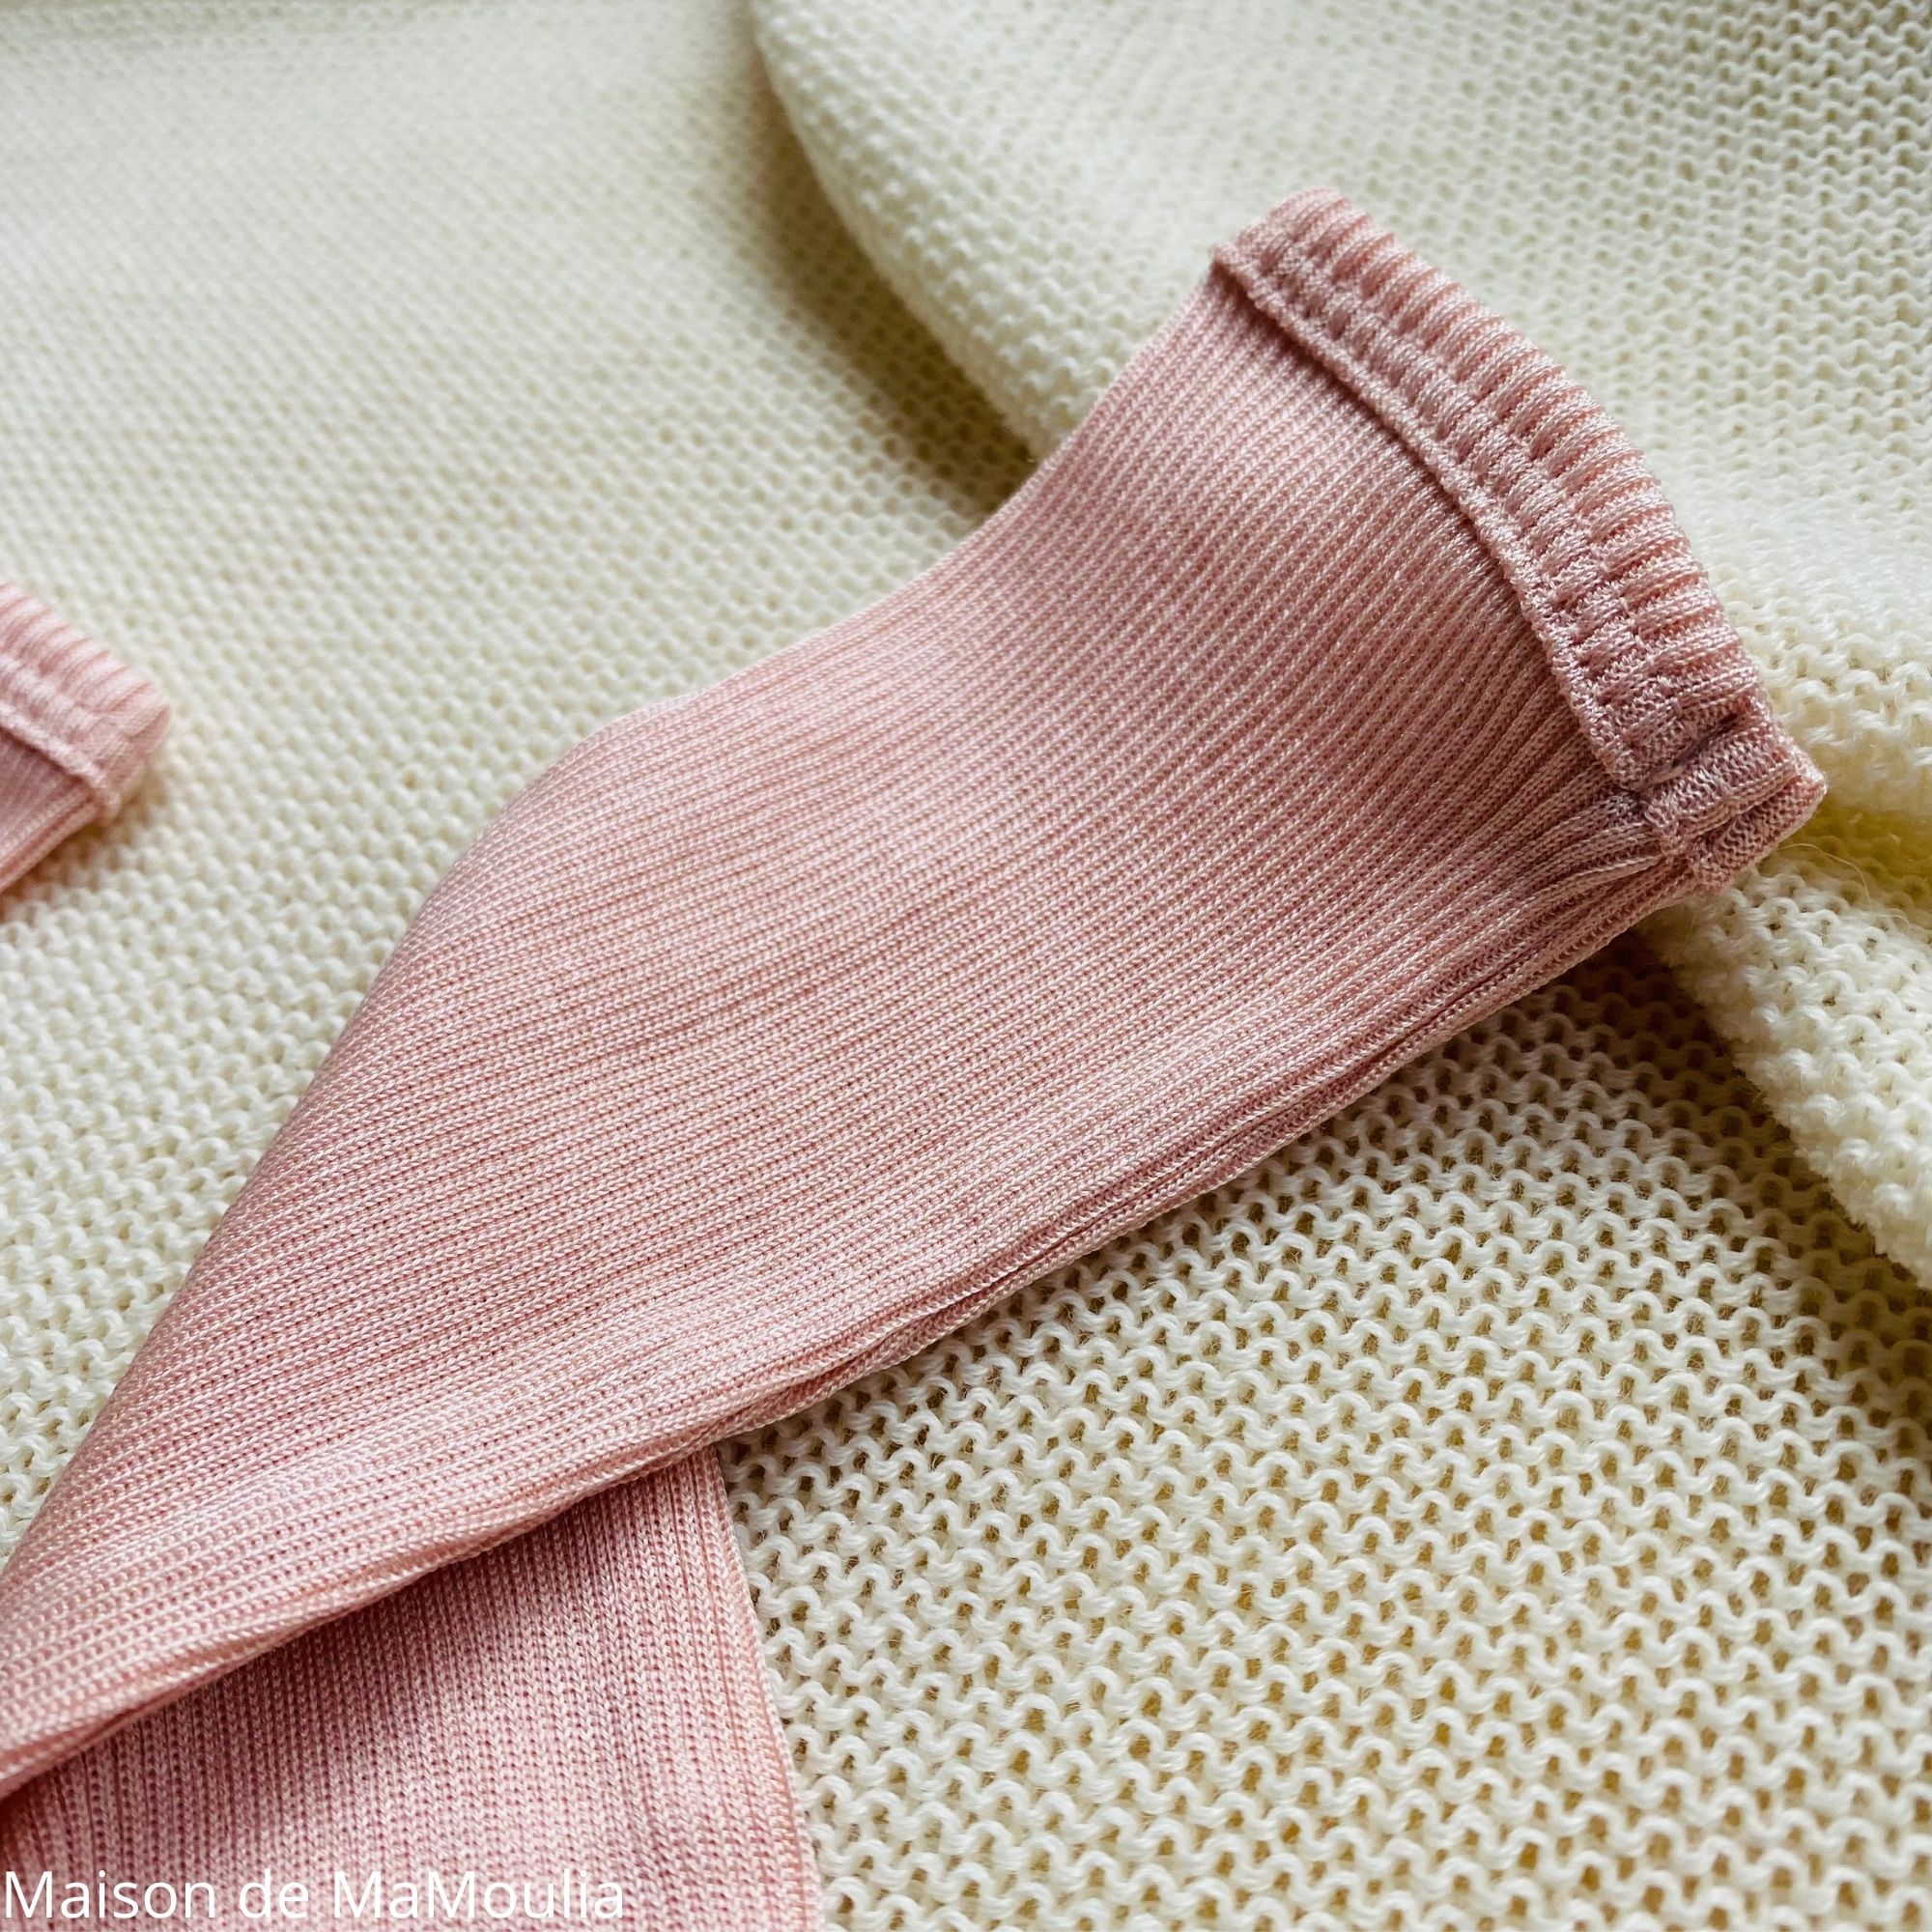 oblada-legging-pantalon-bebe-soie-cachemire-minimalisma-maison-de-mamoulia-pivoine-rose